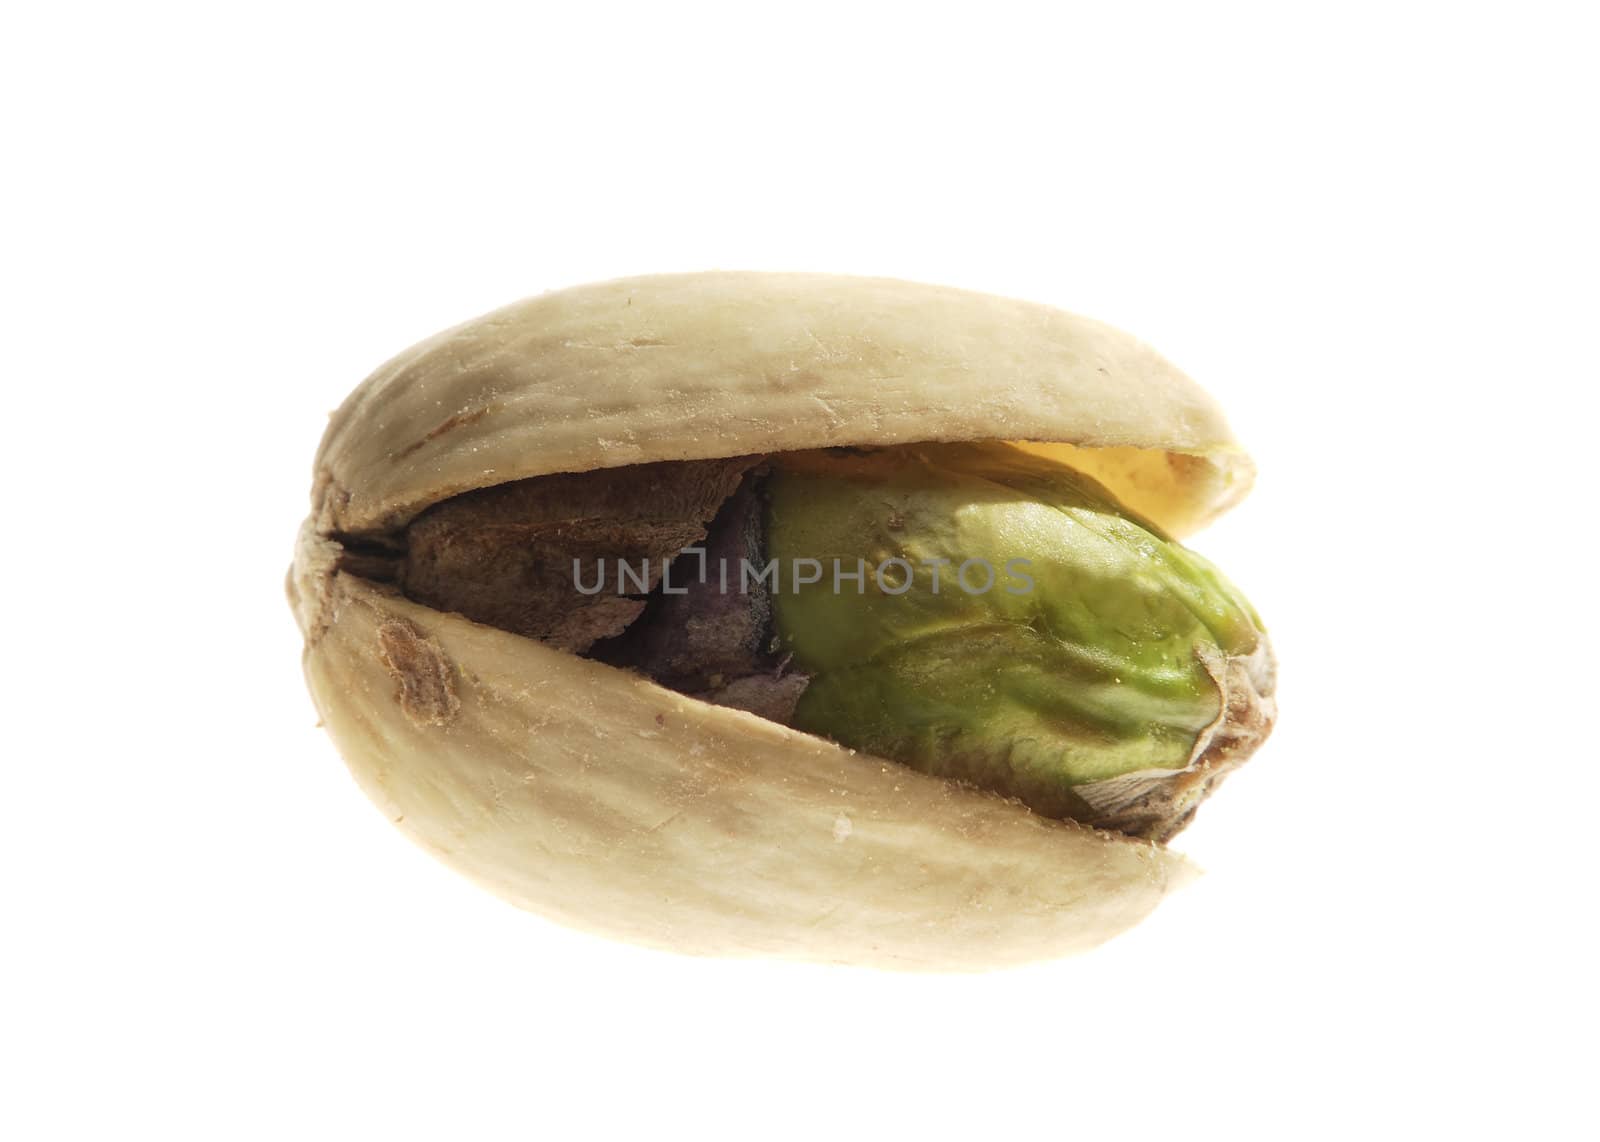 The pistachio nut by hanusst